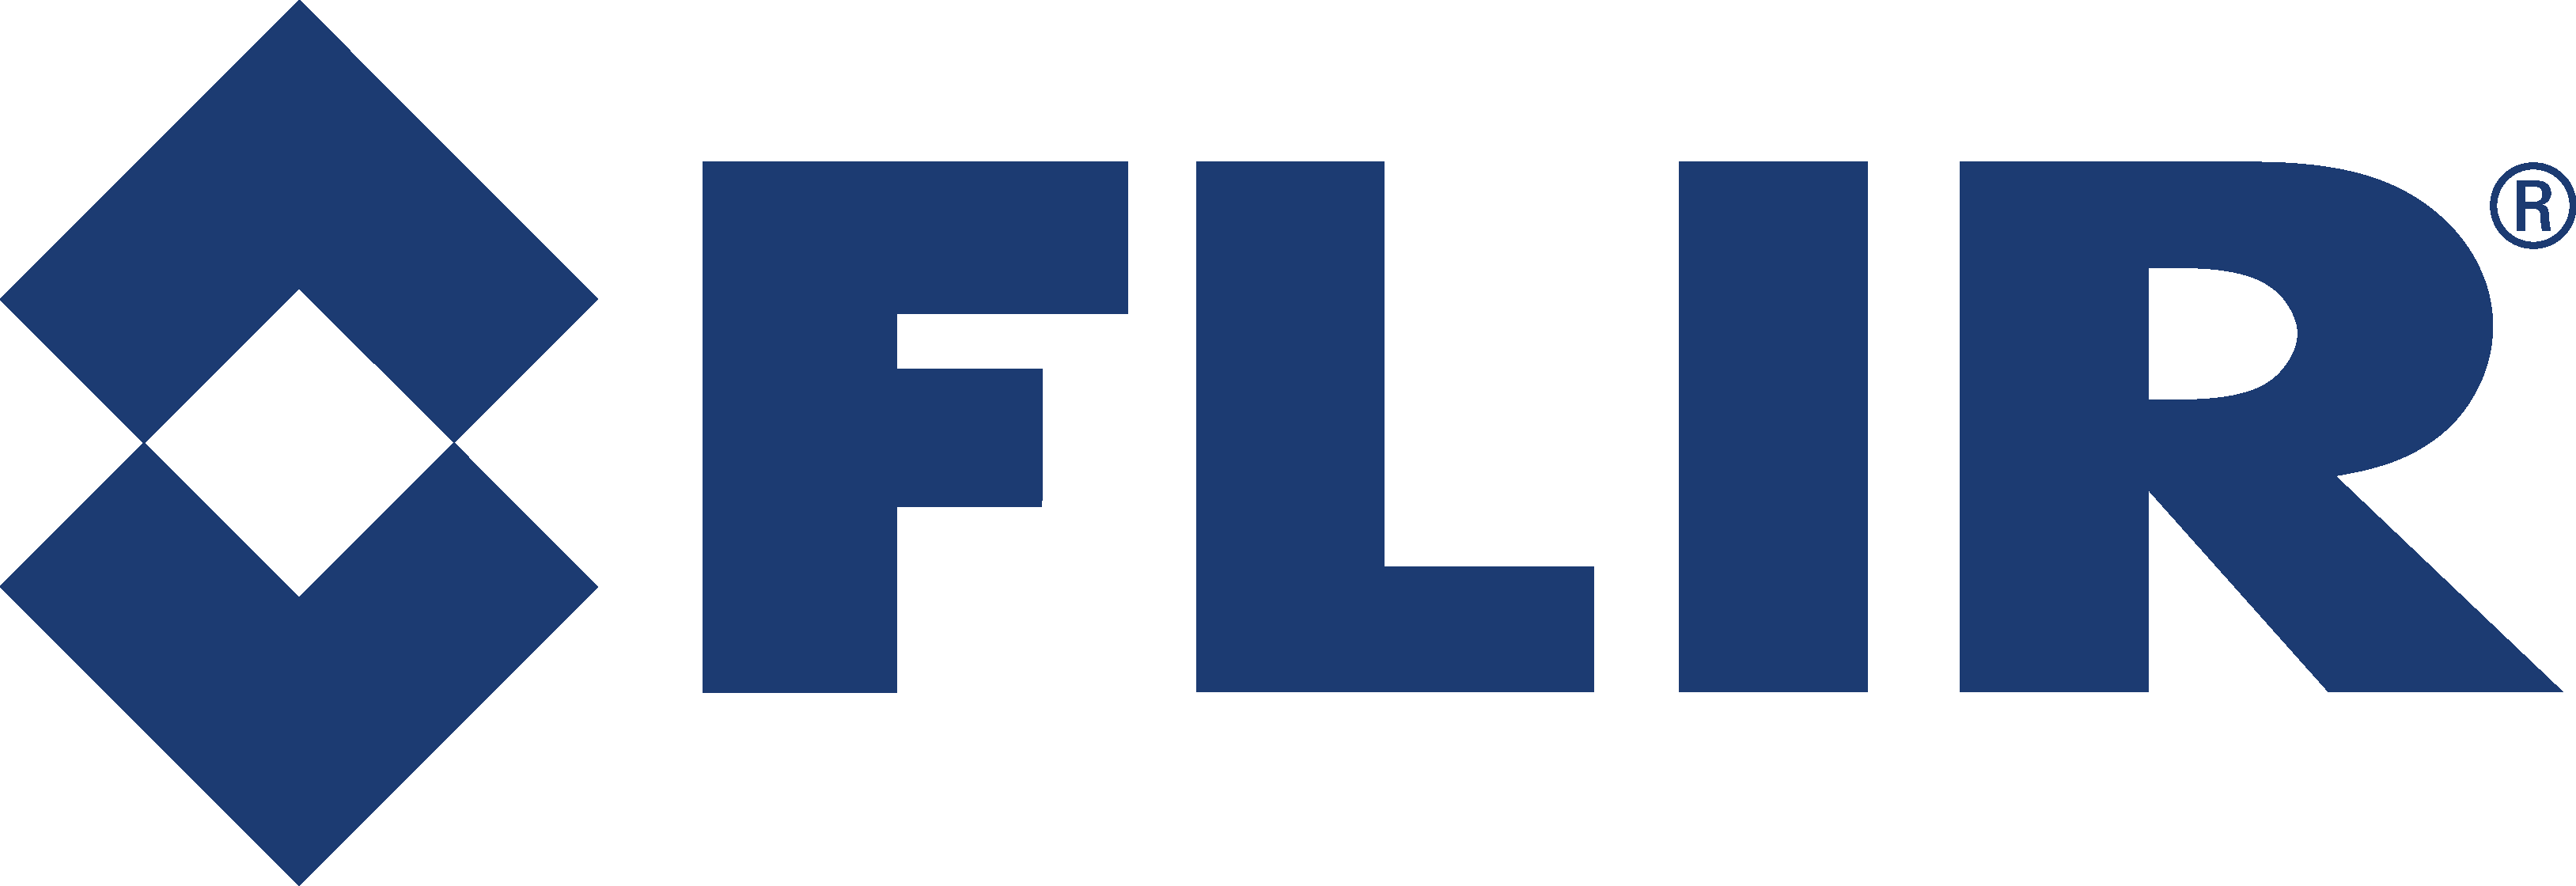 FLIR Logo png